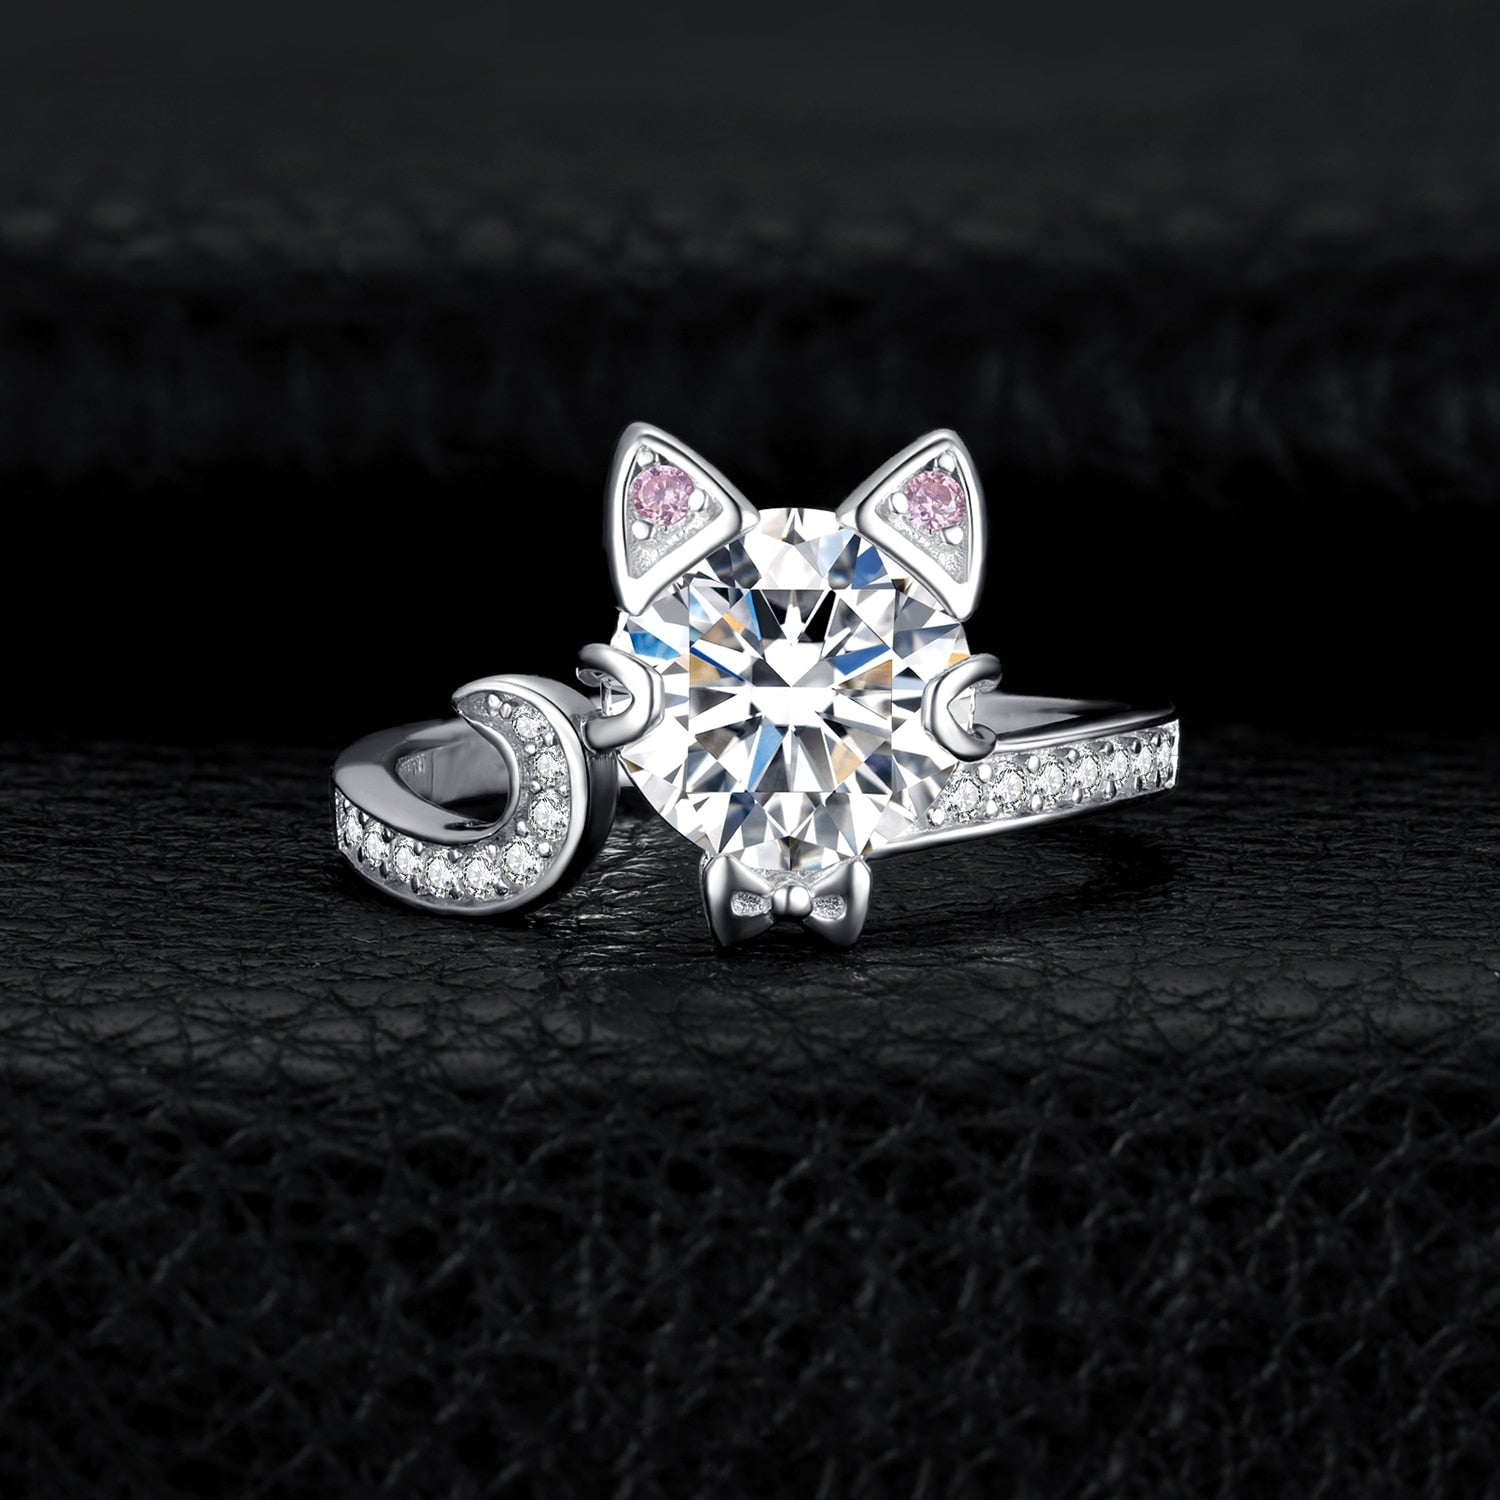 Charming Cat Ring - cat rings